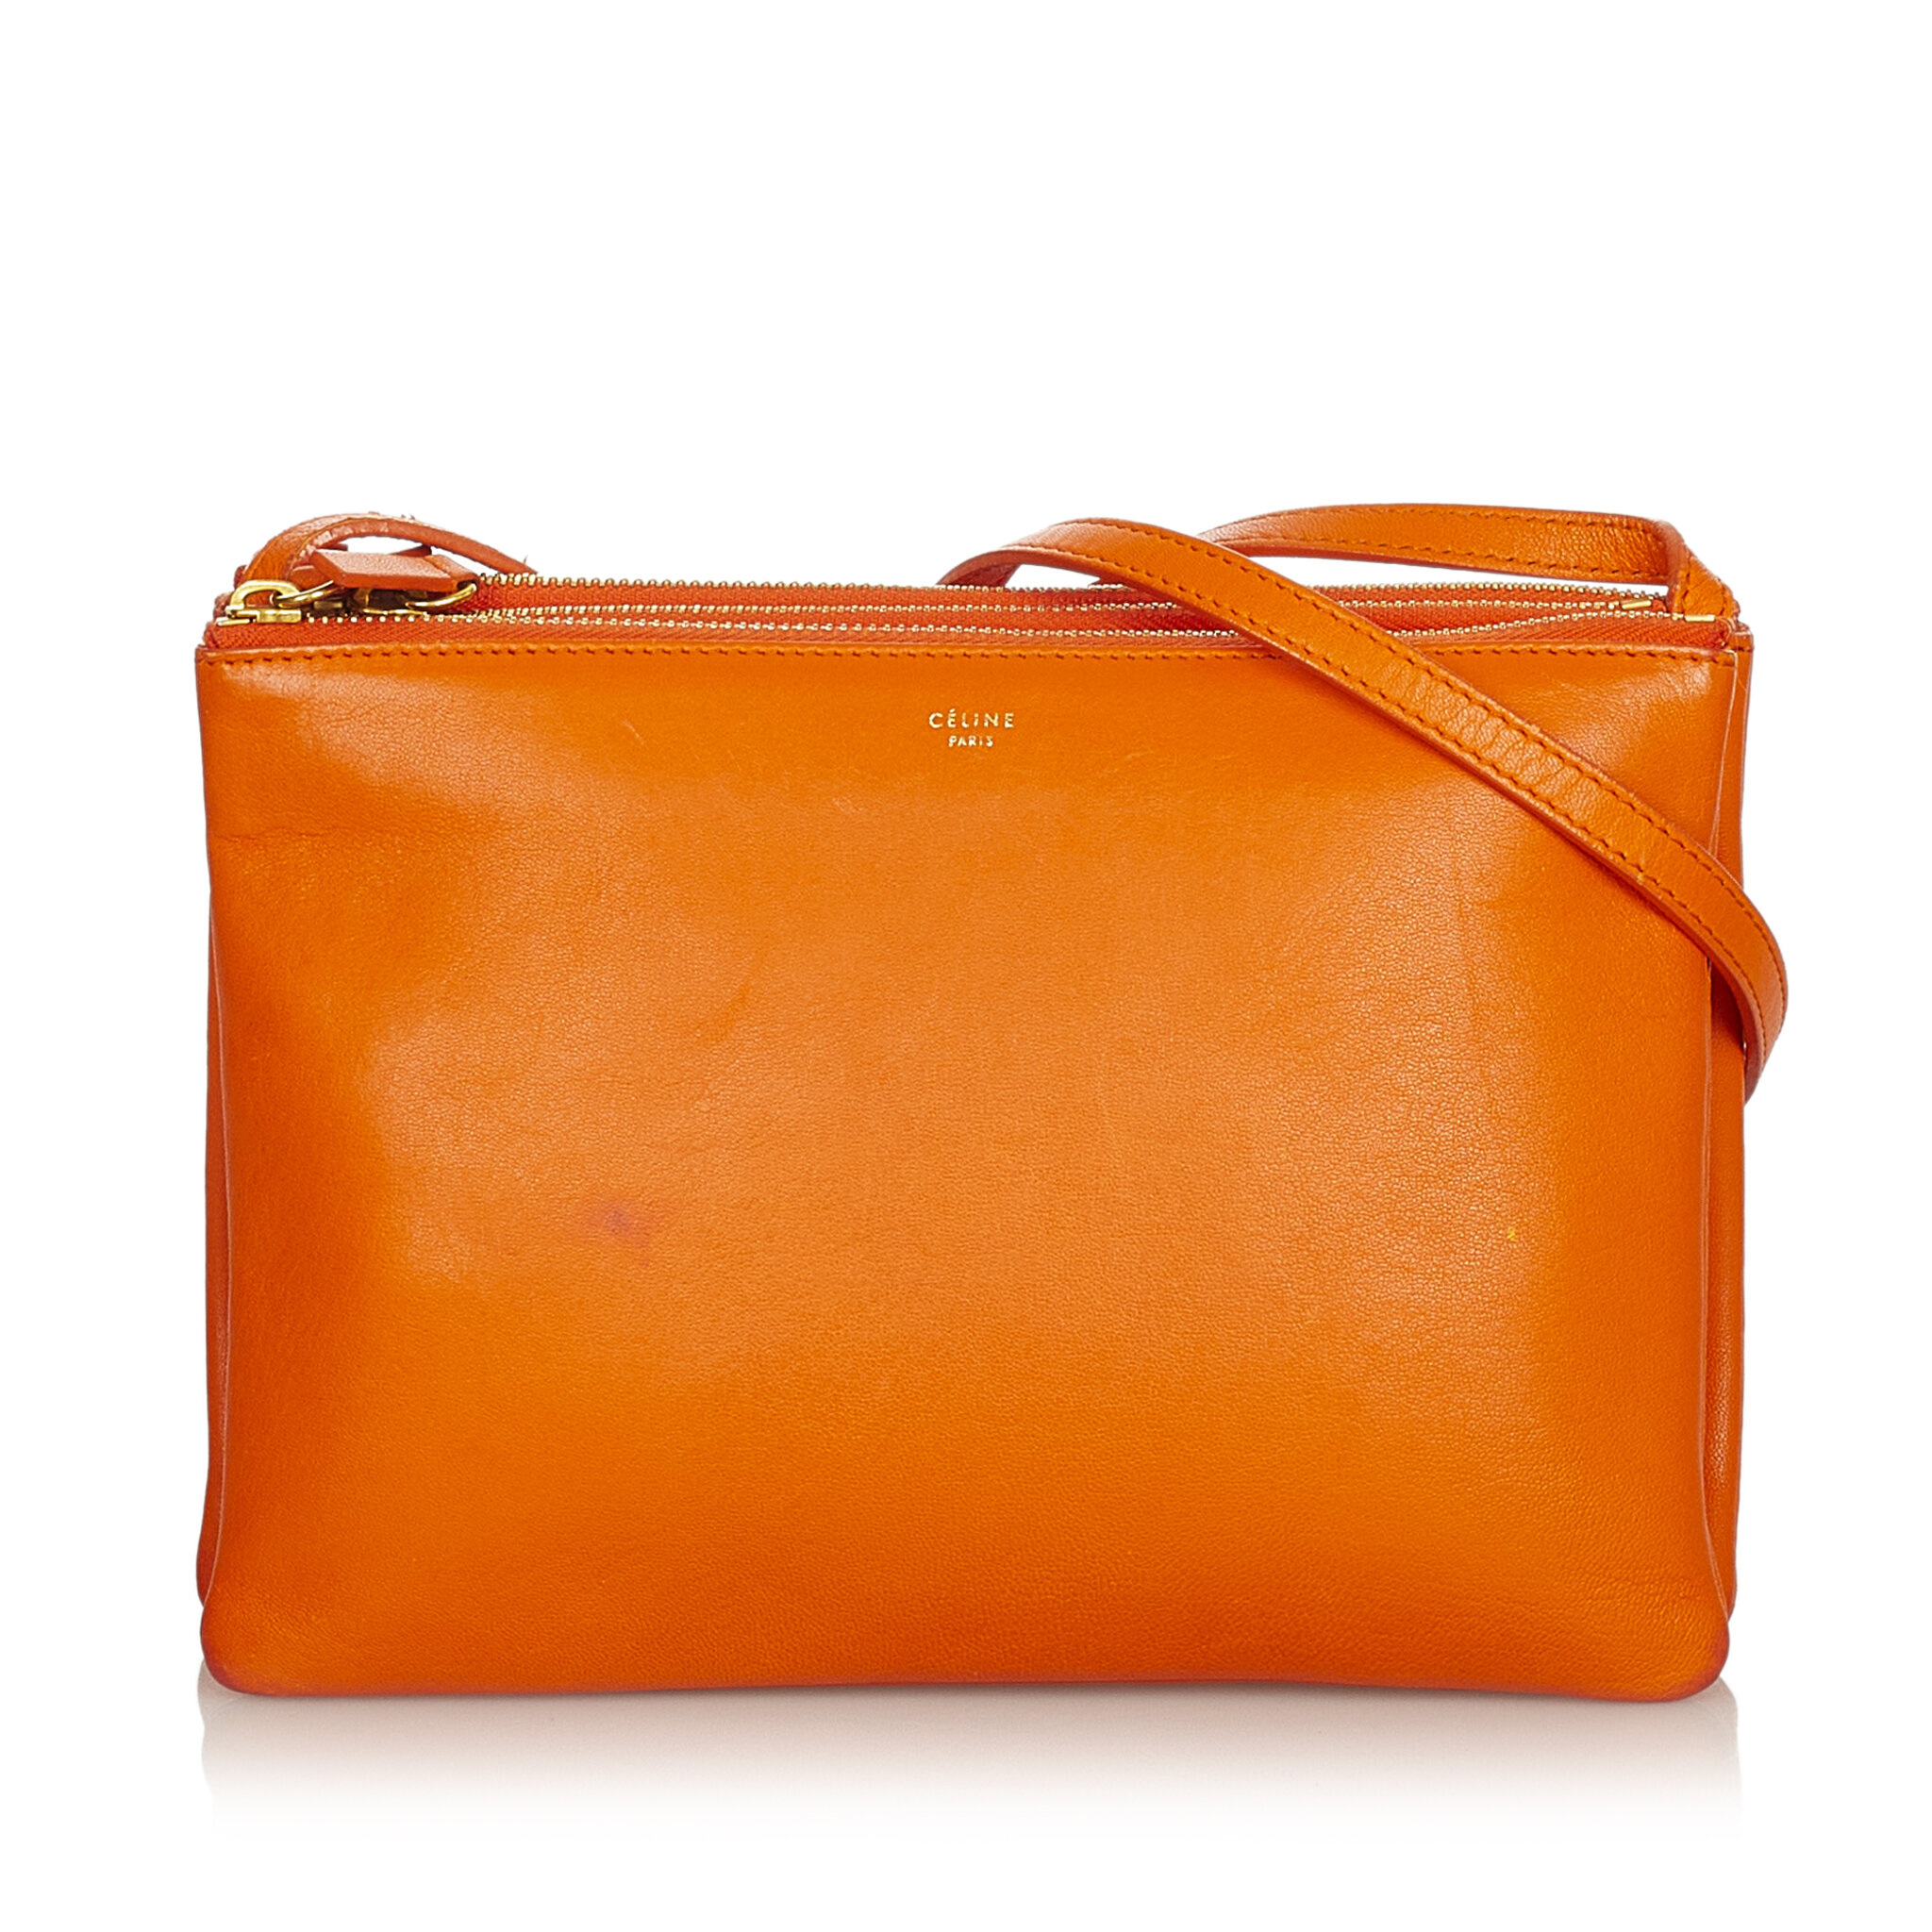 Celine Trio Leather Crossbody Bag, ONESIZE, orange